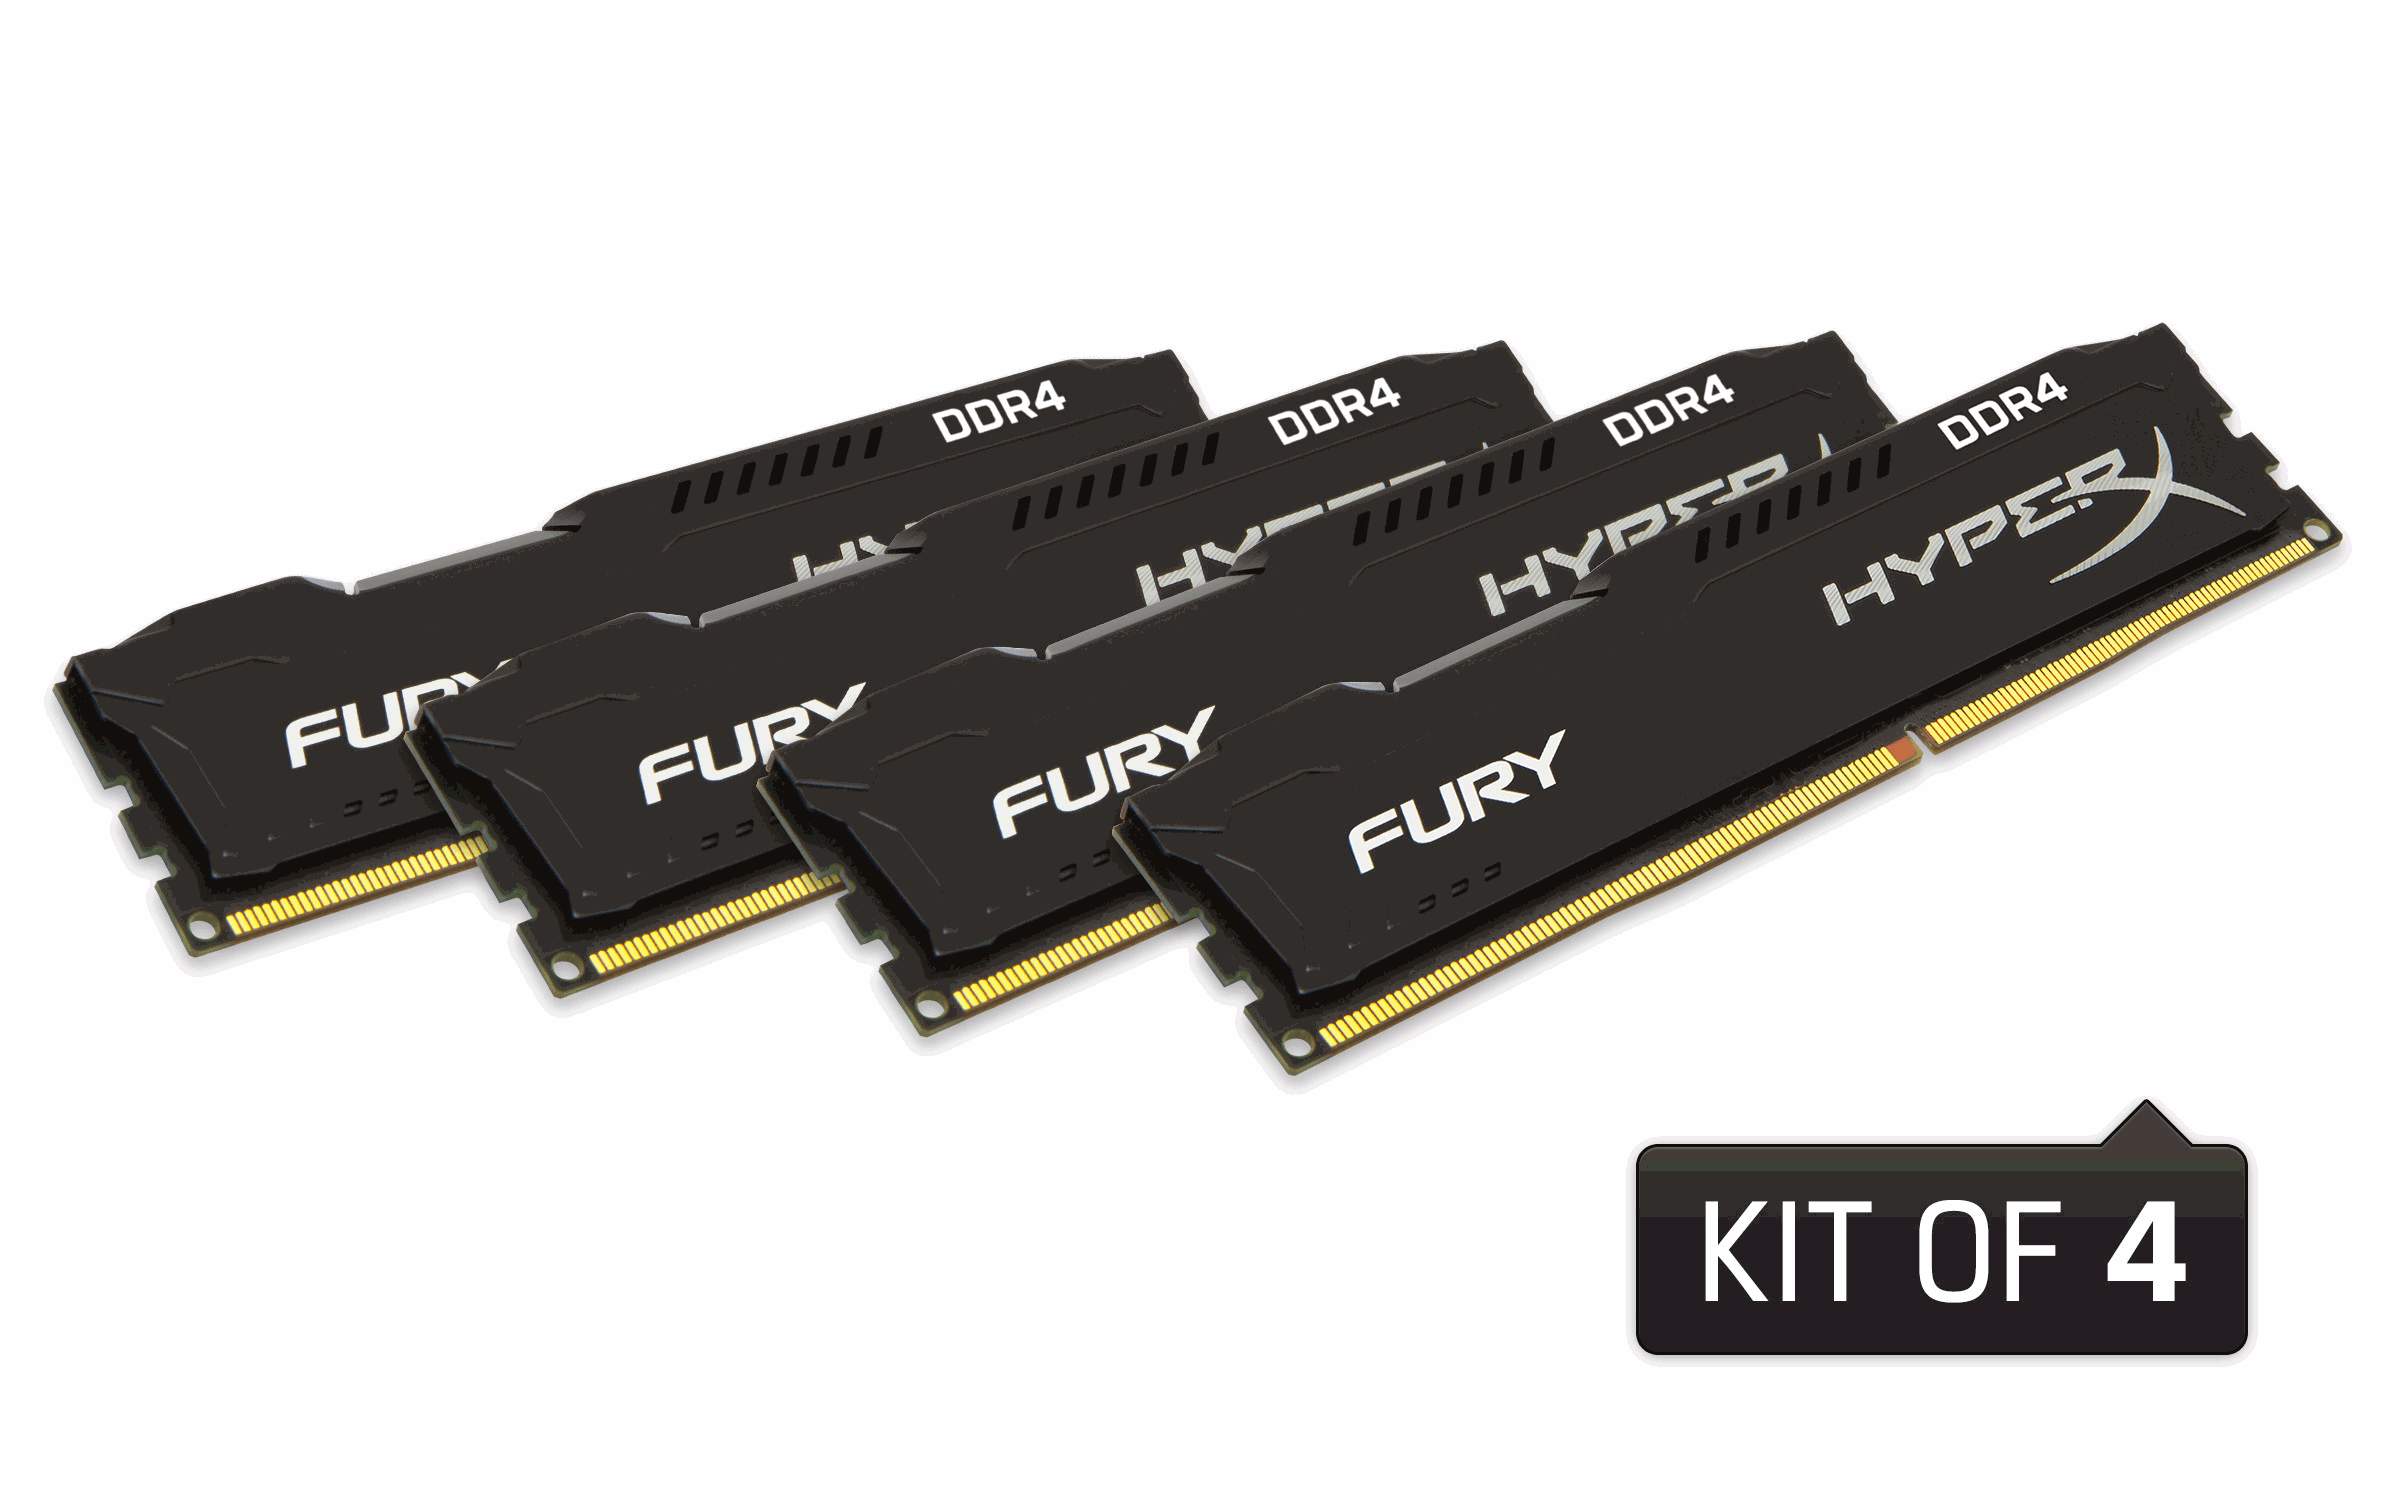 HyperX FURY DDR4 kit of 4